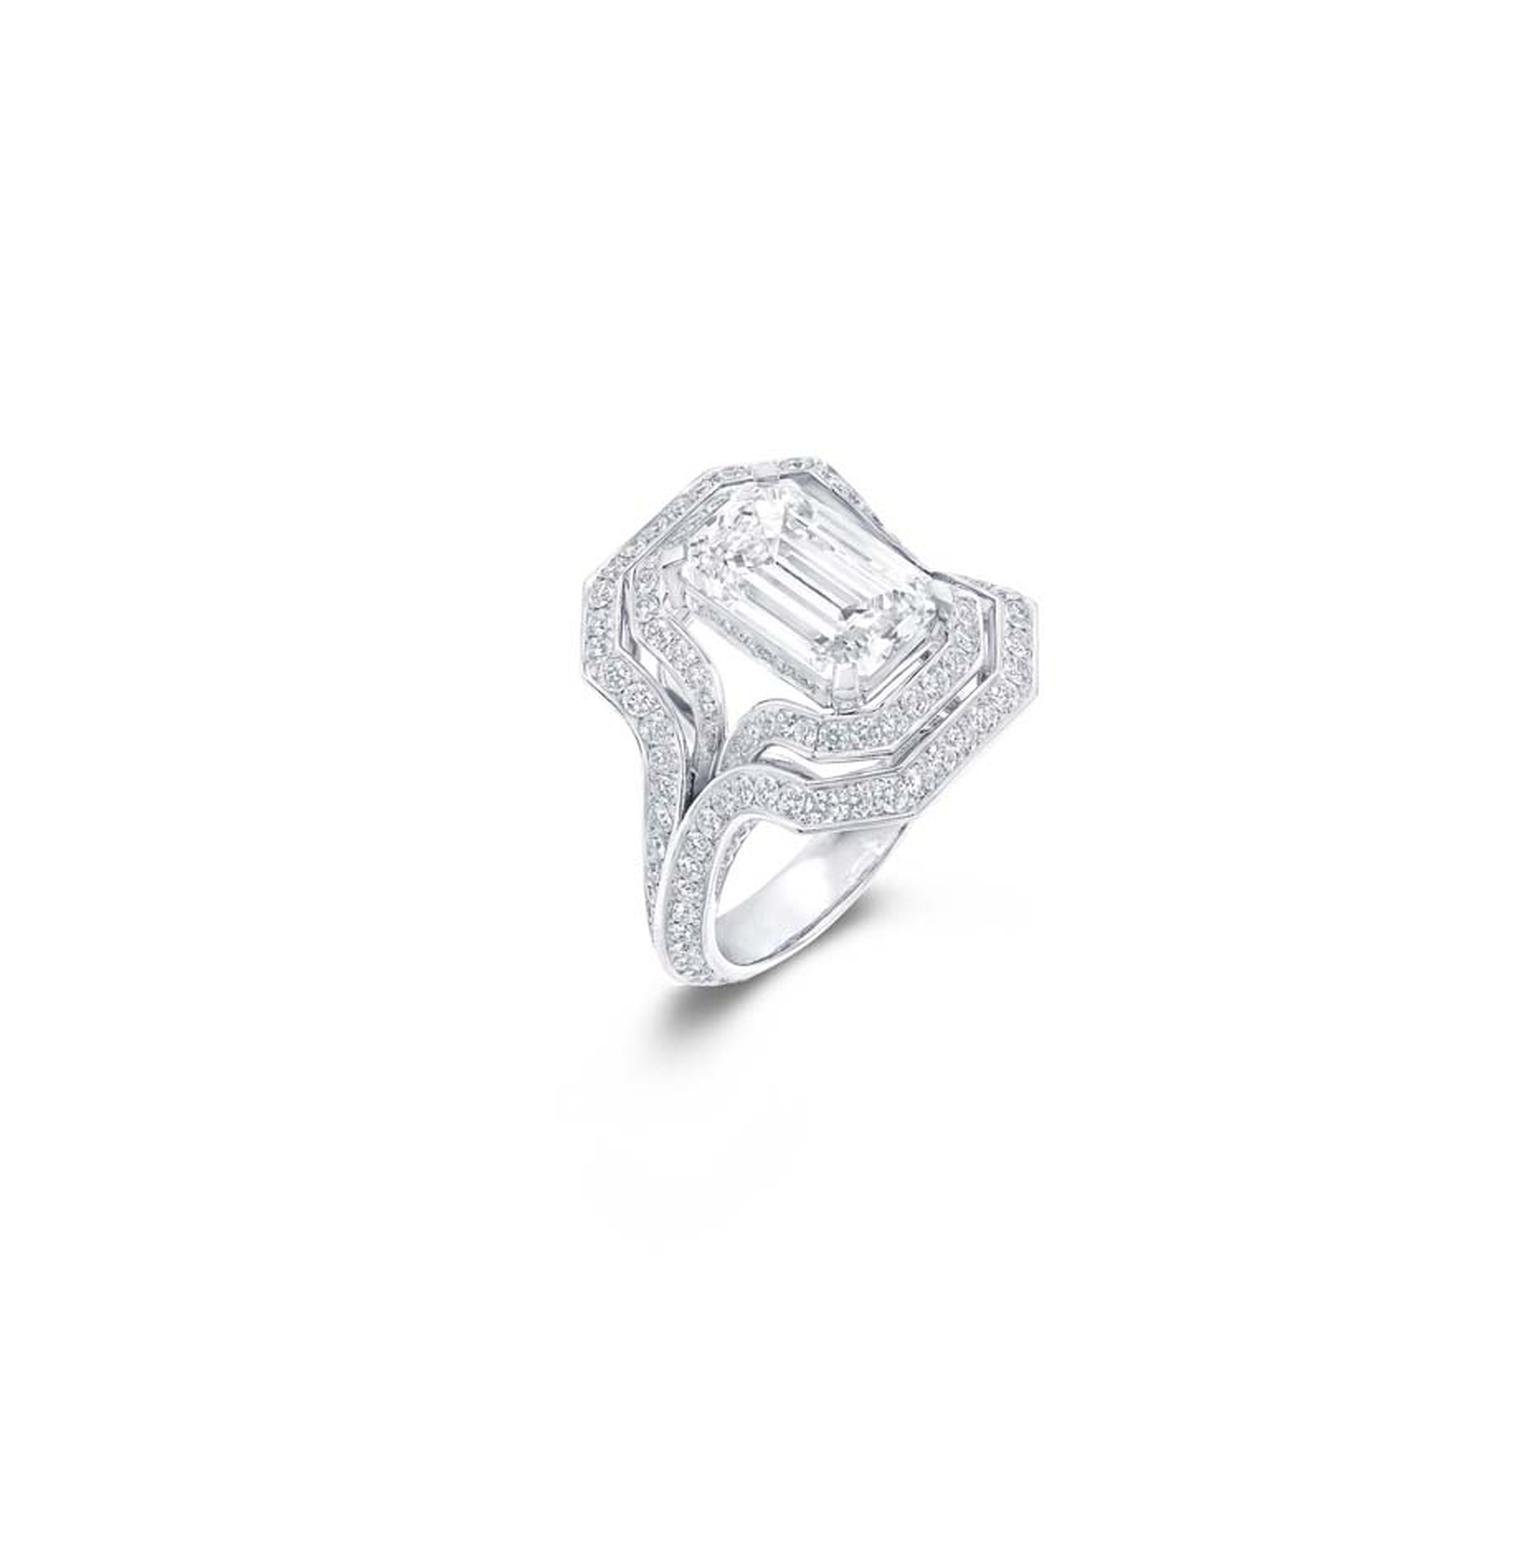 Graff Legacy emerald-cut diamond engagement ring.